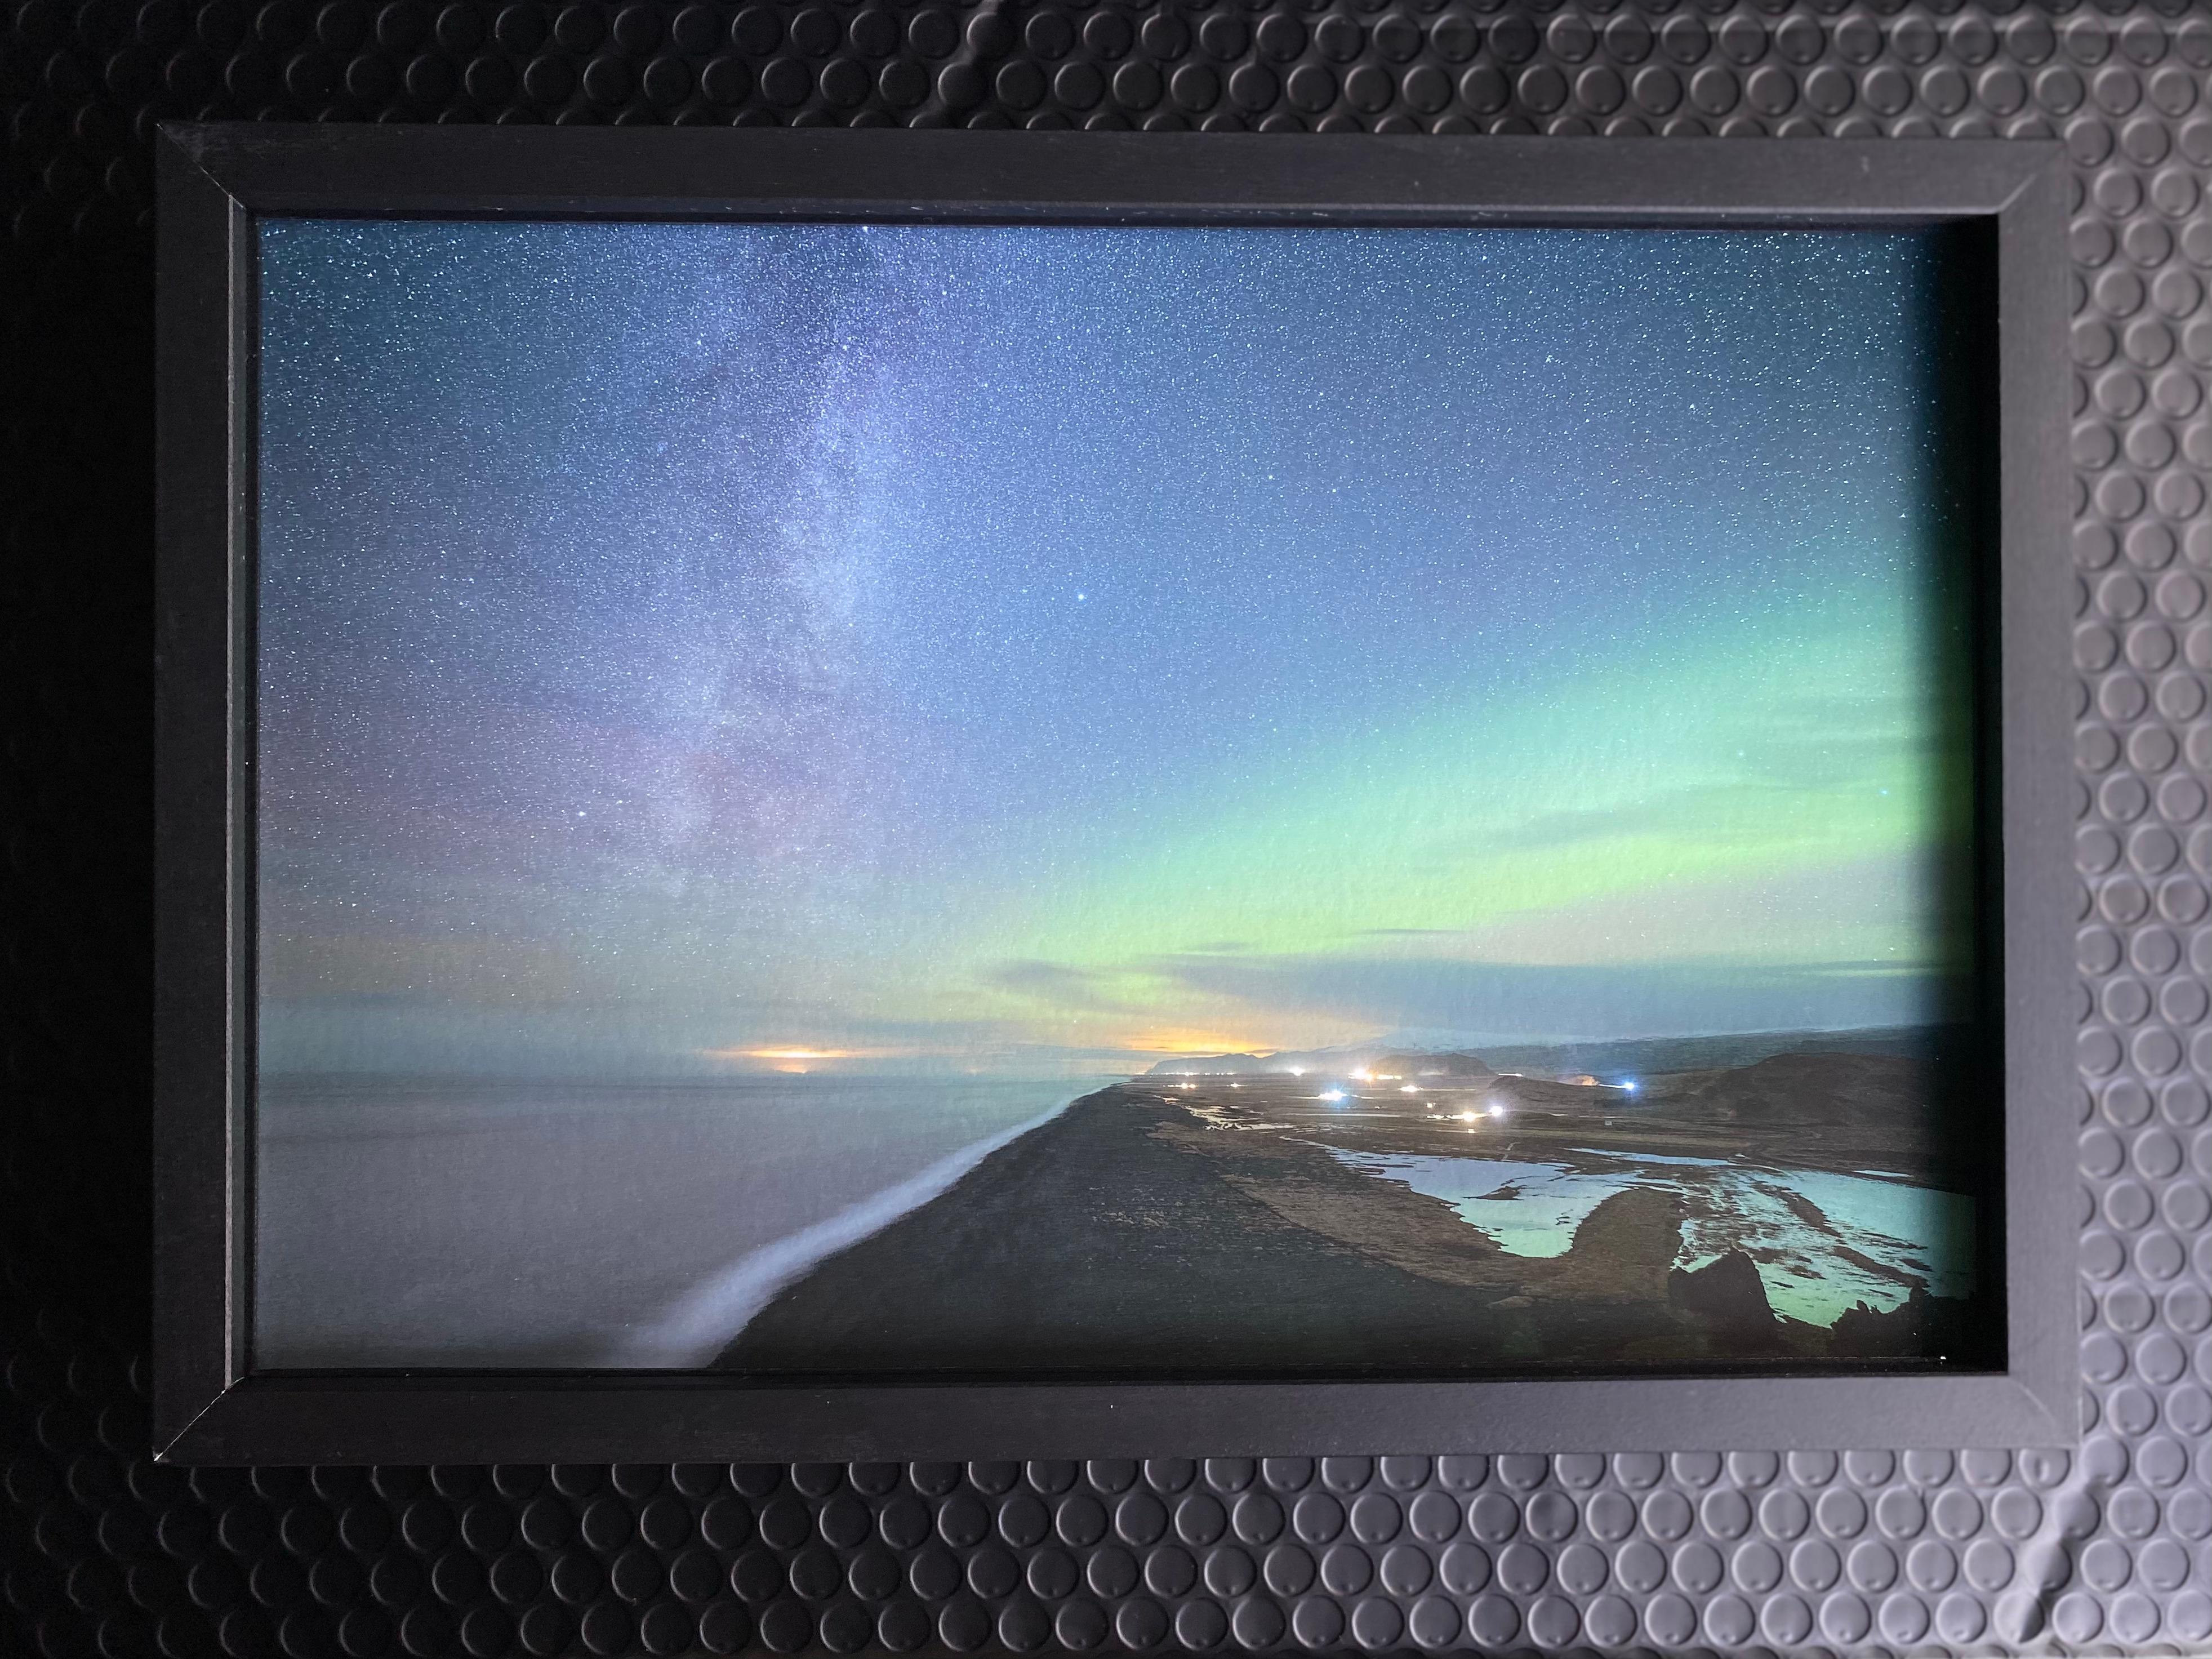 Anna Dobrovolskaya-Mints Landscape Photograph - Starry sky and Northern Lights in Iceland. Green color, small framed photo